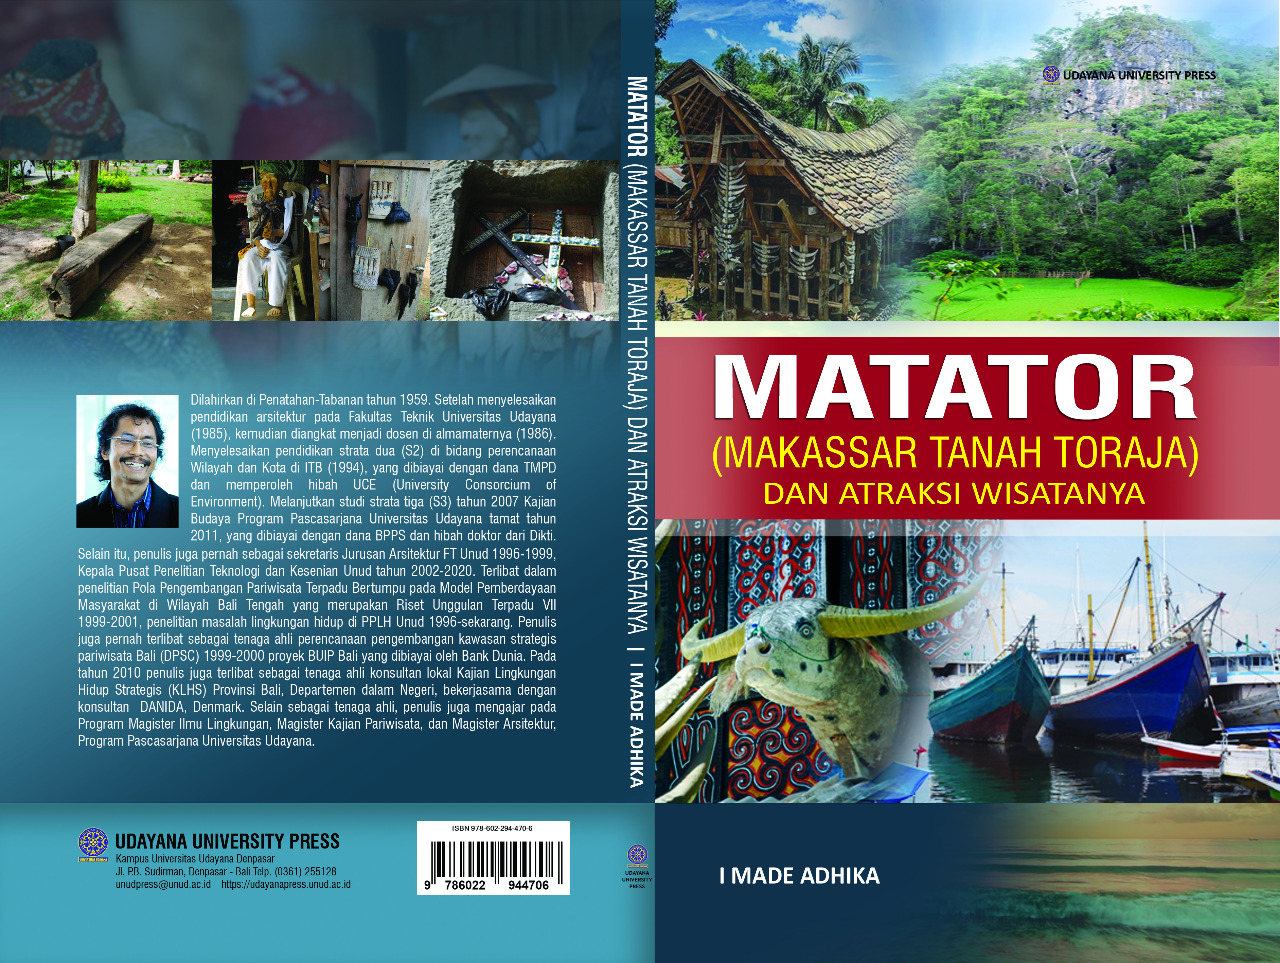 MAMATOR (Makassar Tanah Toraja dan Atraksi Wisatanya